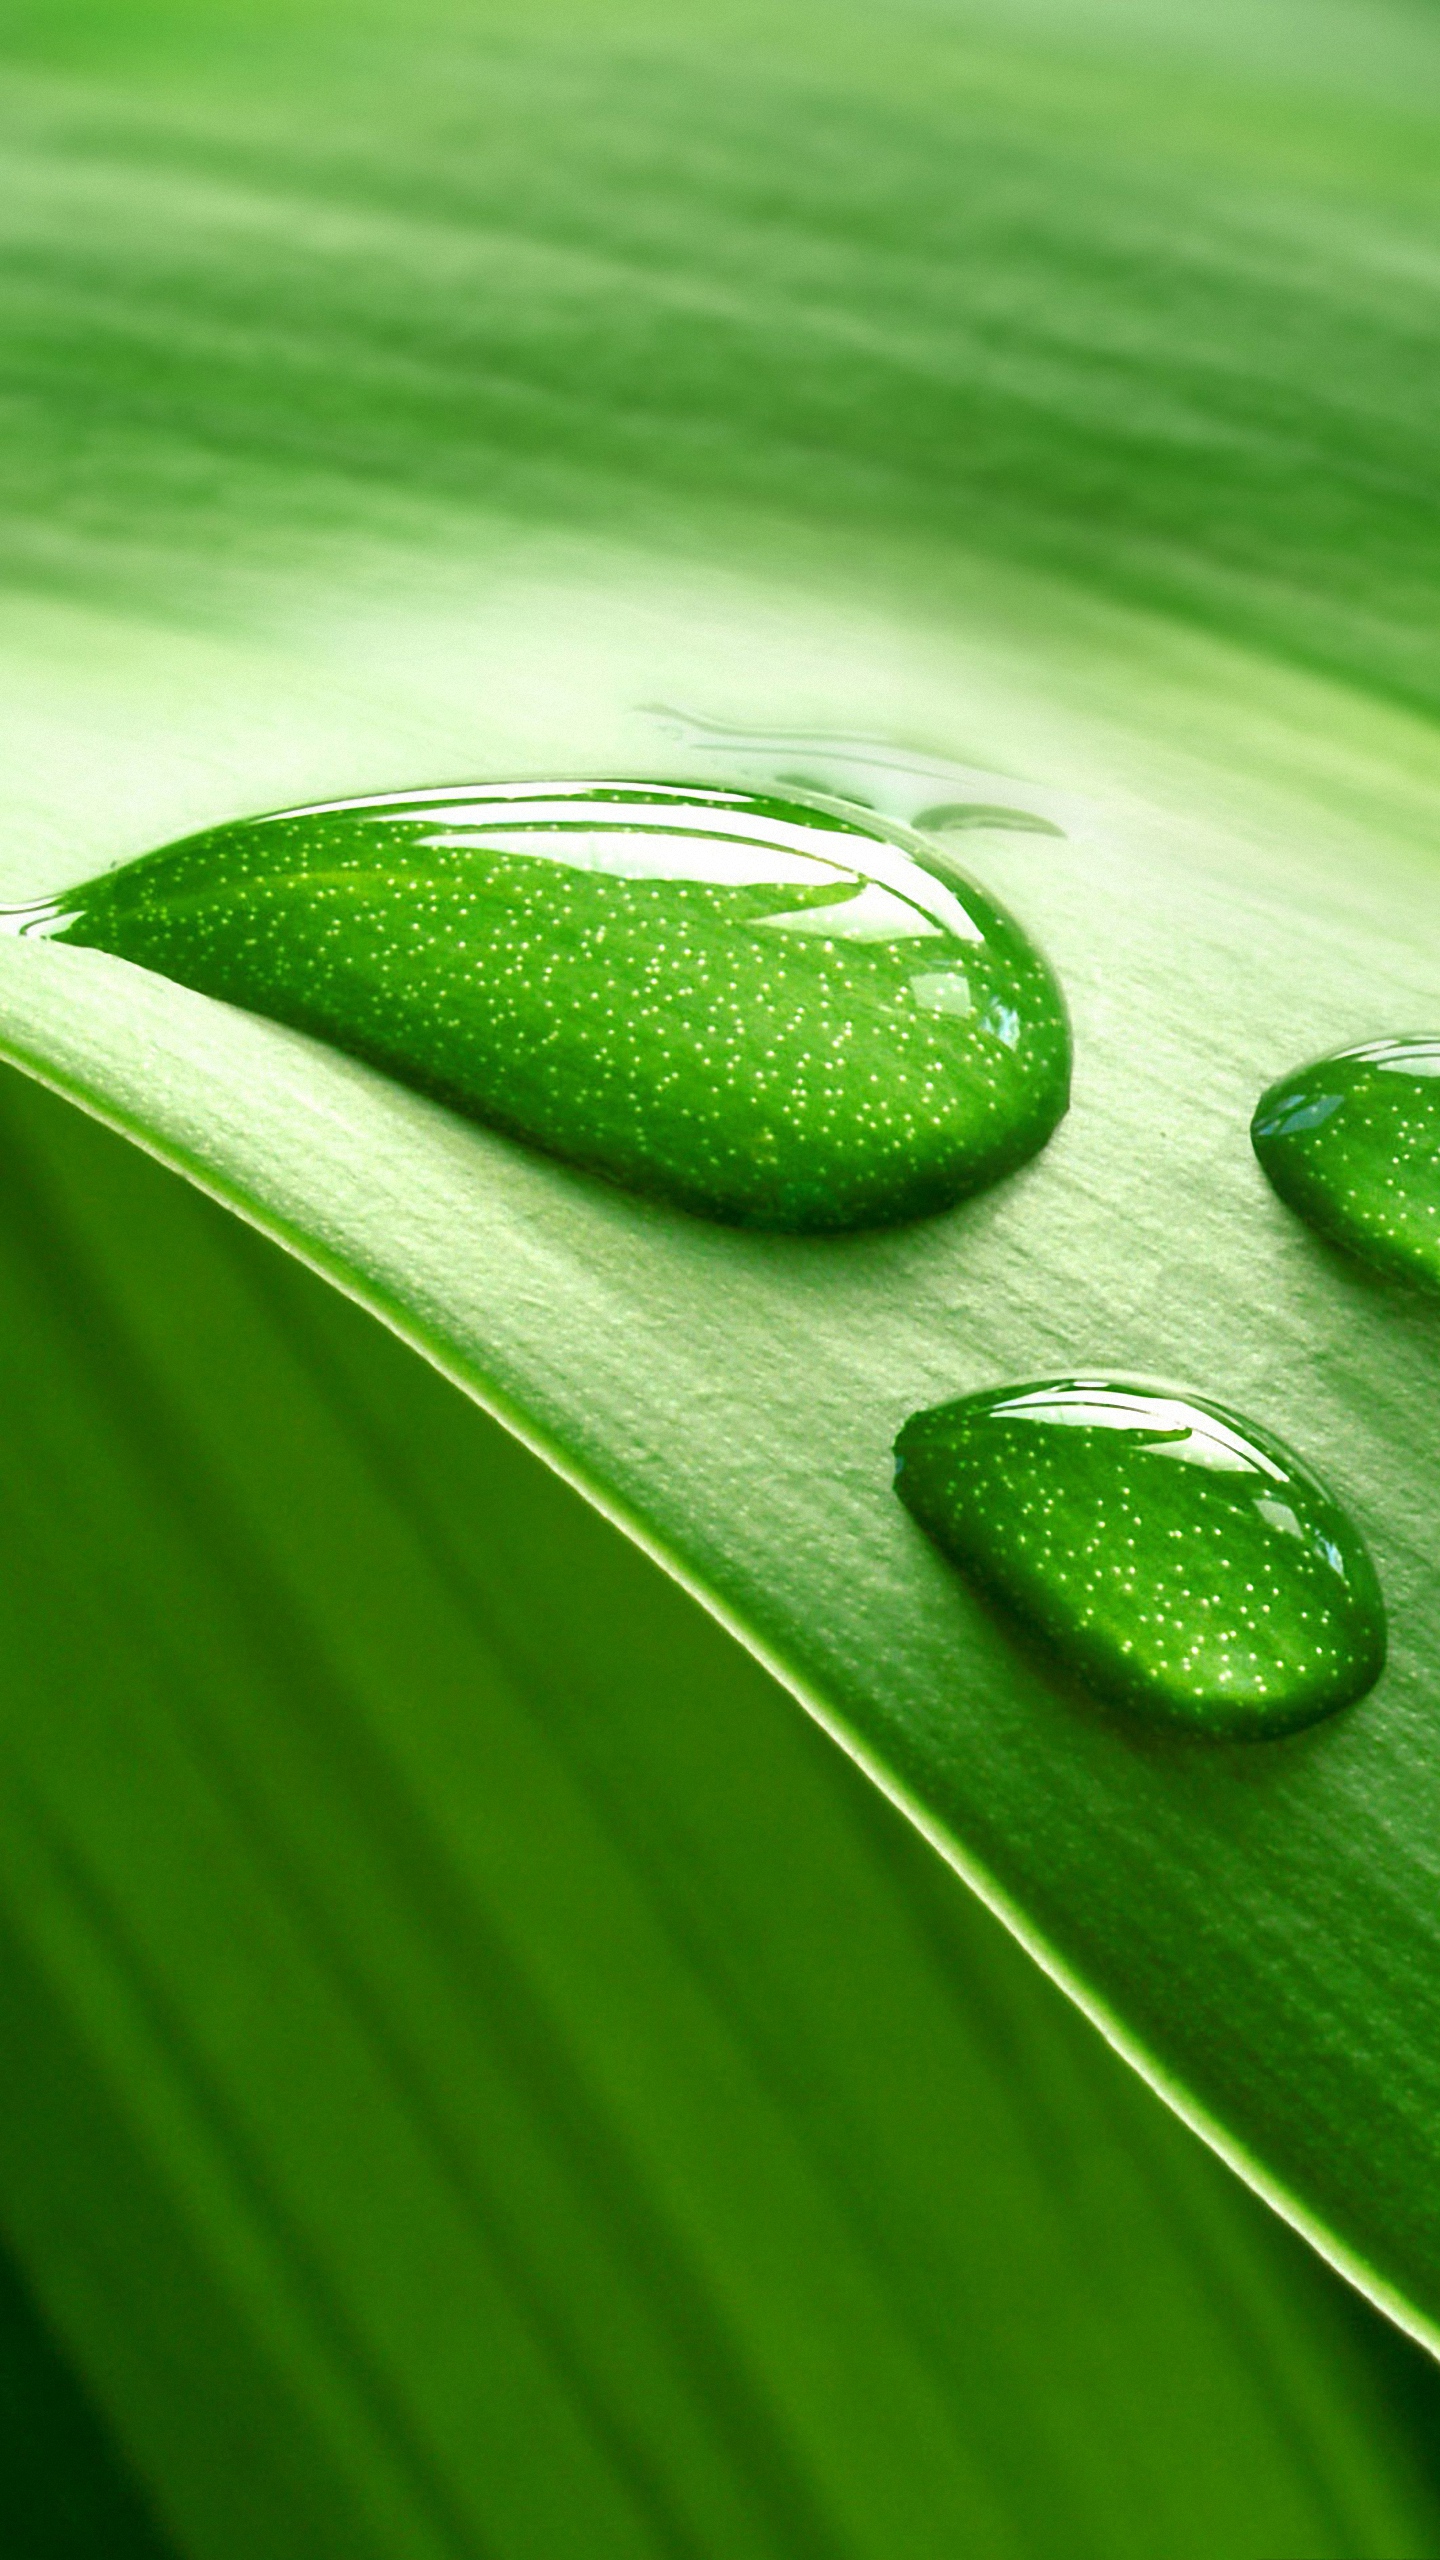 lg g4 wallpaper,green,water,leaf,dew,drop